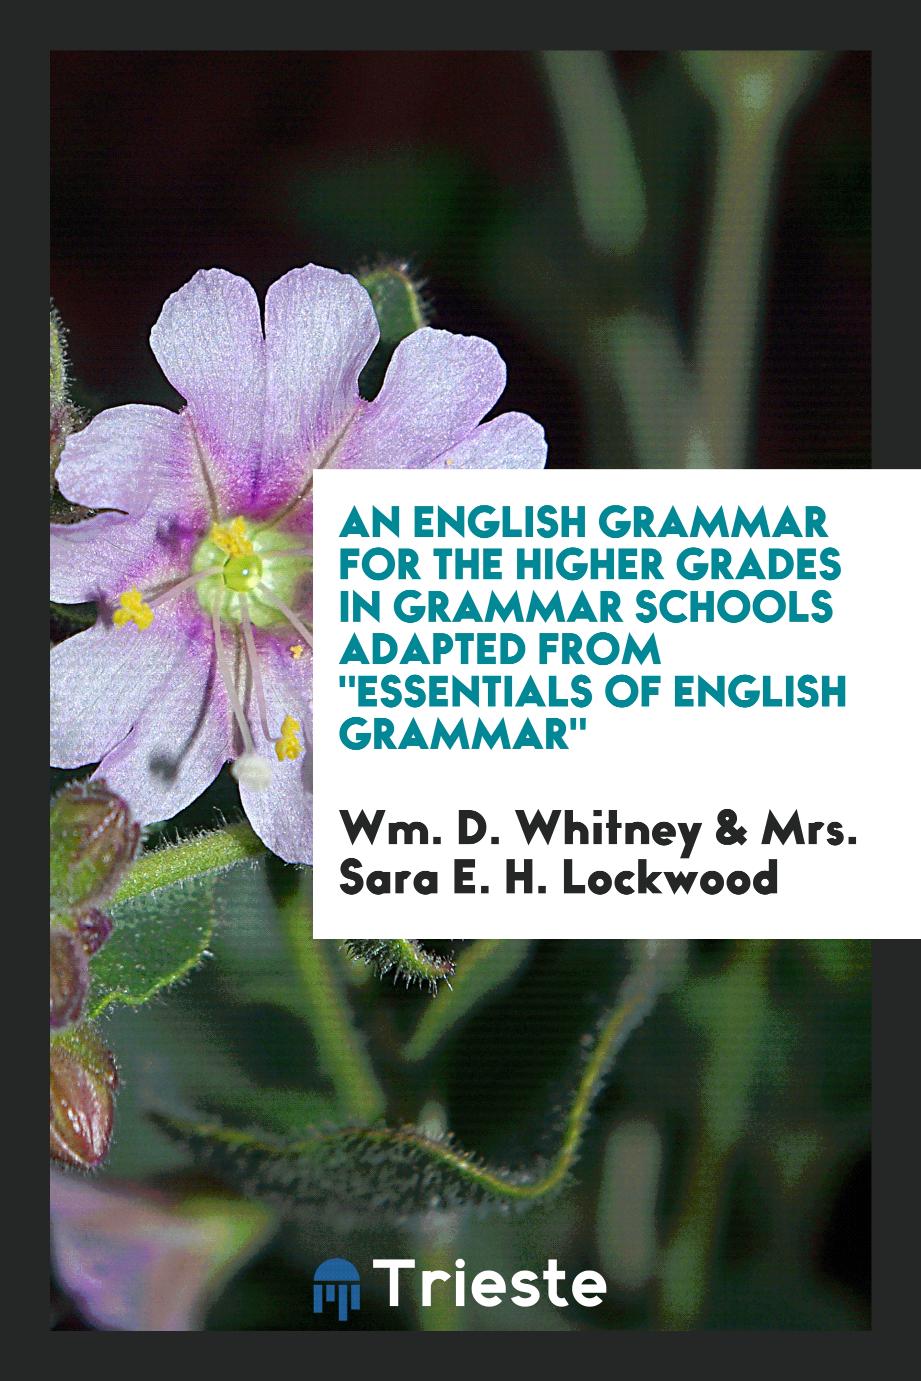 An English Grammar for the Higher Grades in Grammar Schools Adapted From "Essentials of English Grammar"